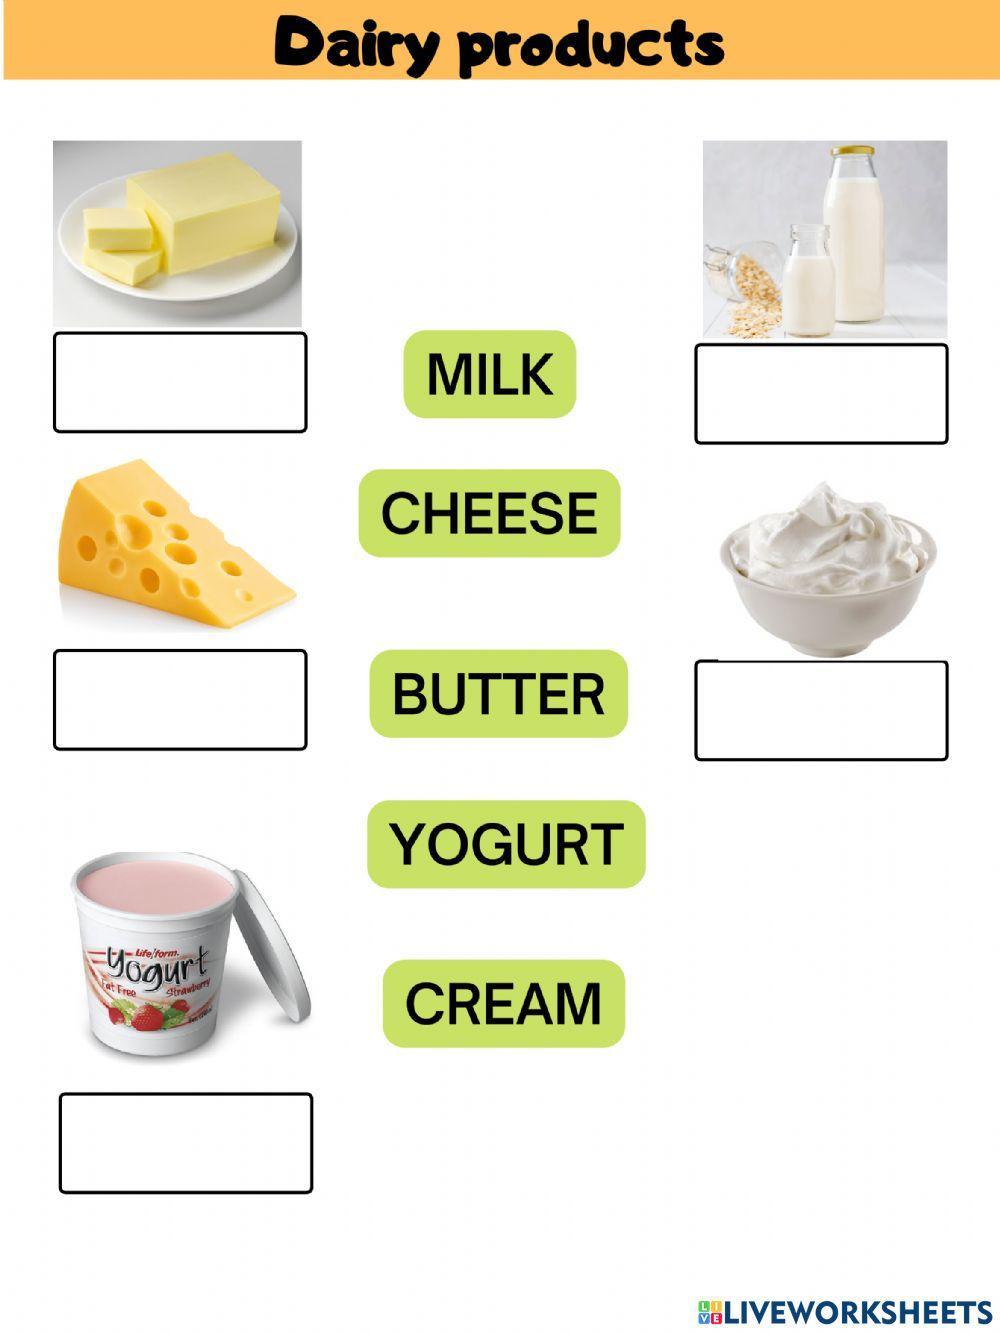 Dairy products online worksheet for Bachiller | Live Worksheets